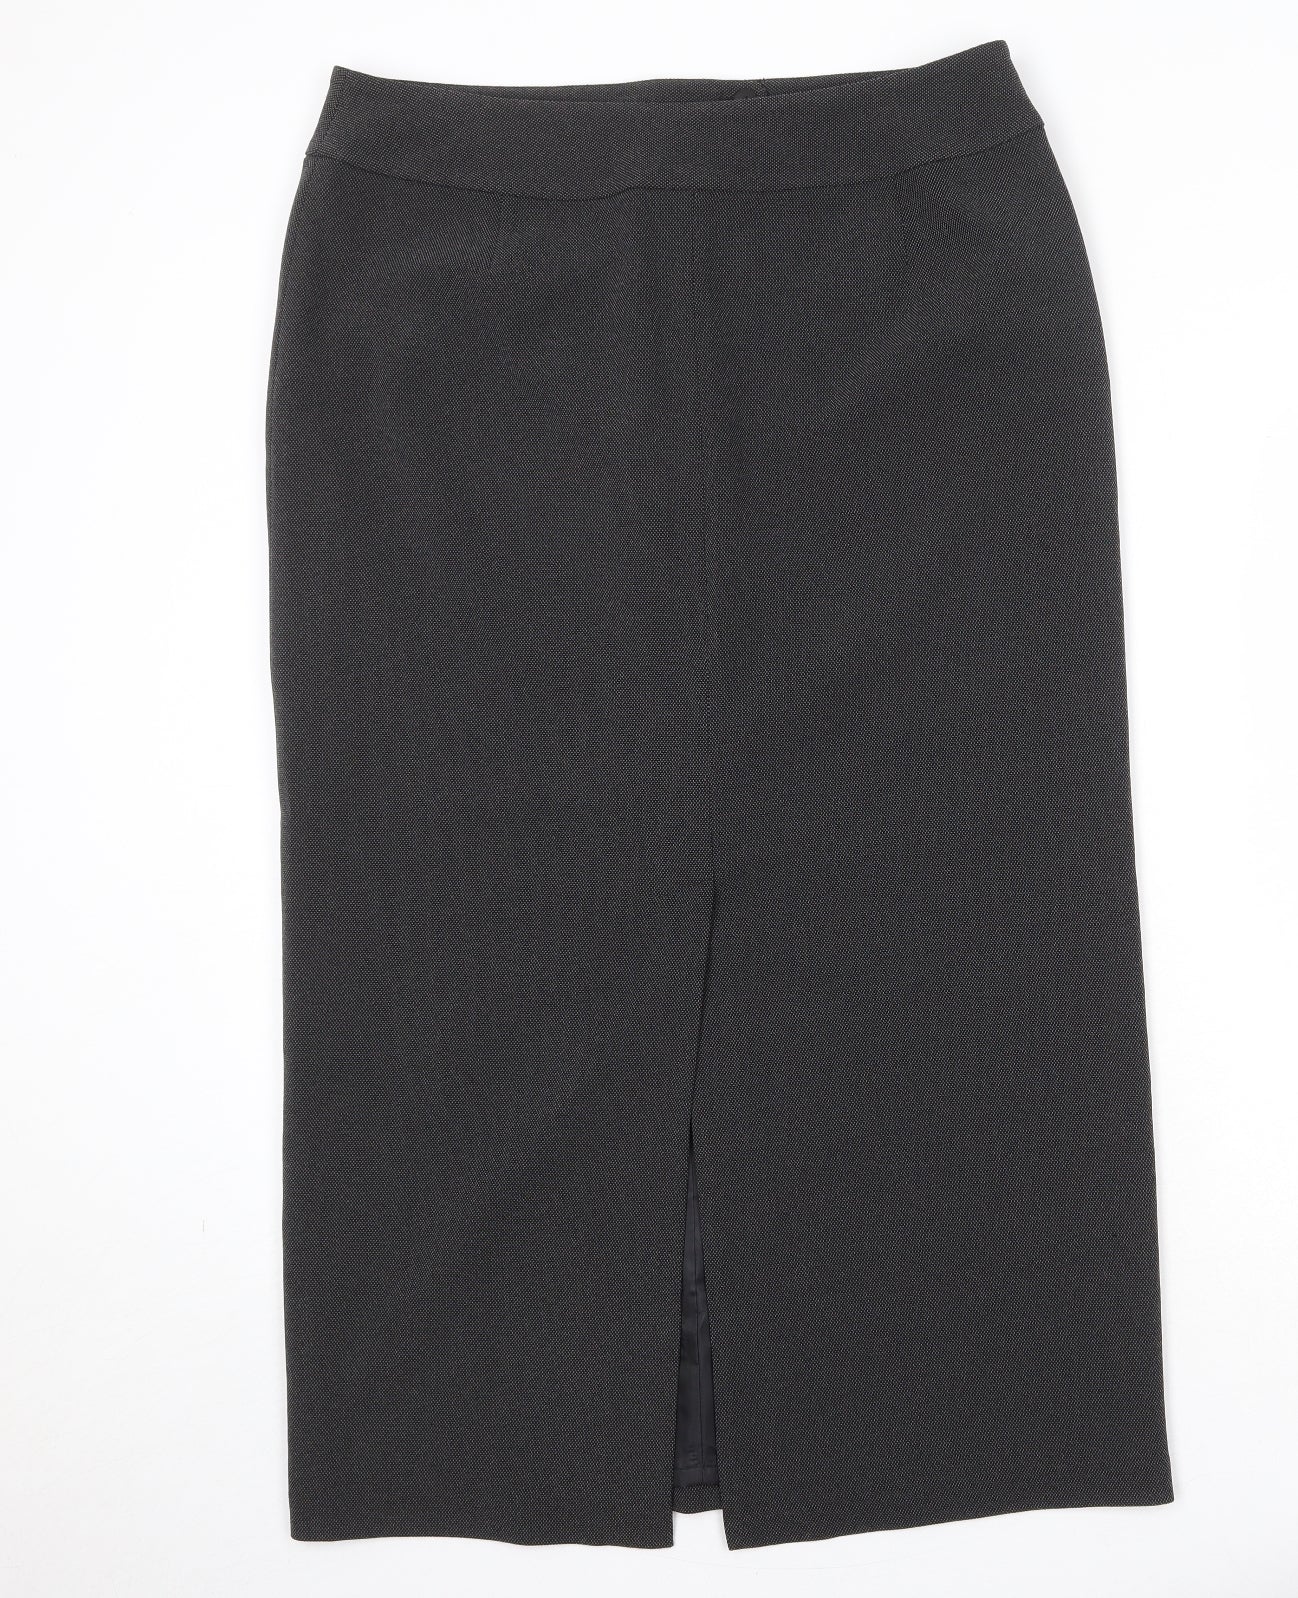 NEXT Womens Grey Polyester A-Line Skirt Size 16 Zip